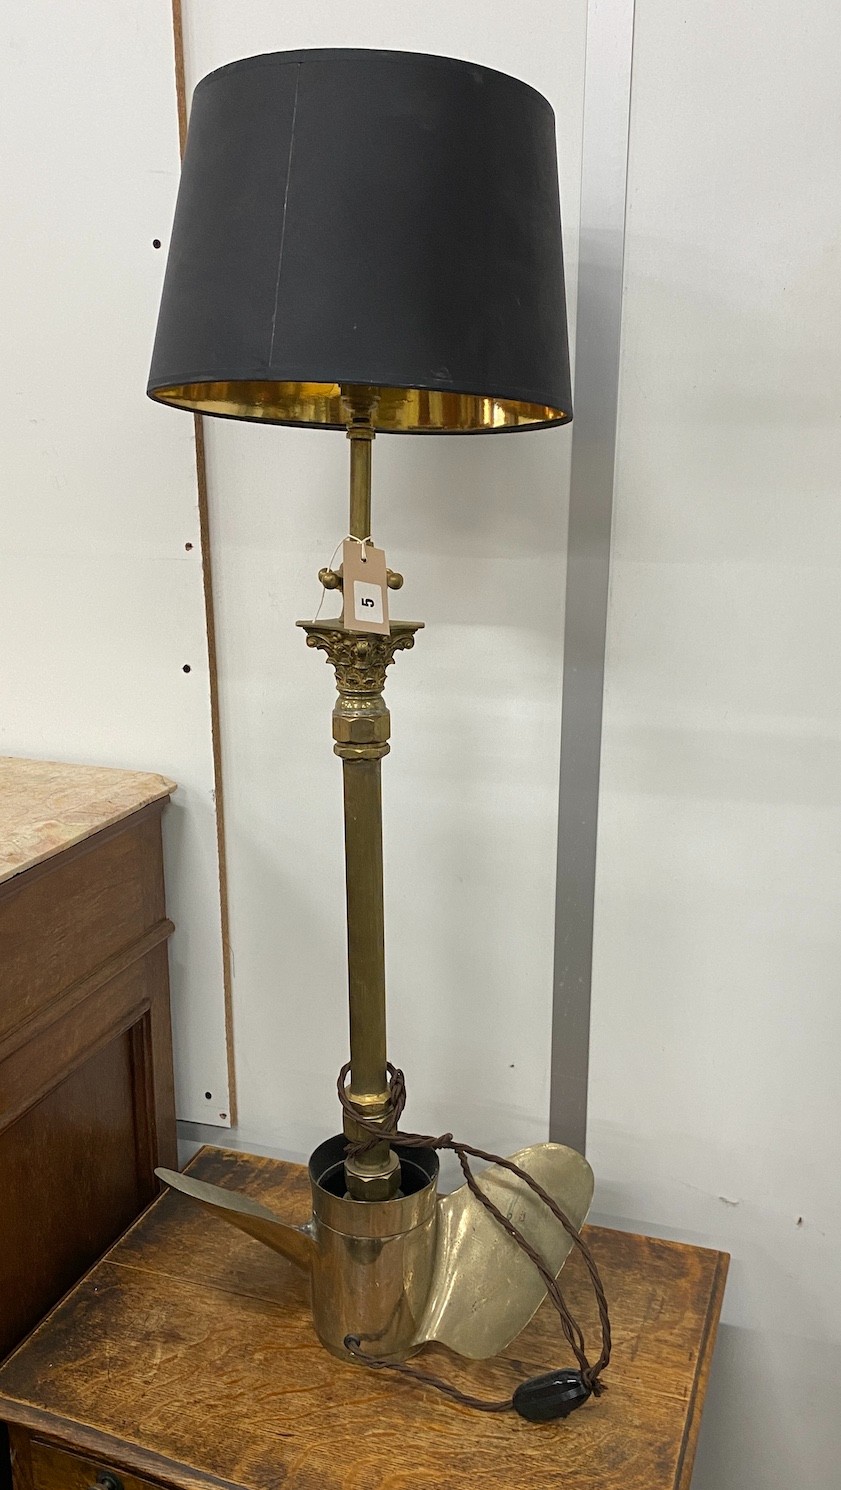 A brass Corinthian column standard lamp with ship propeller base, height including shade 92cm